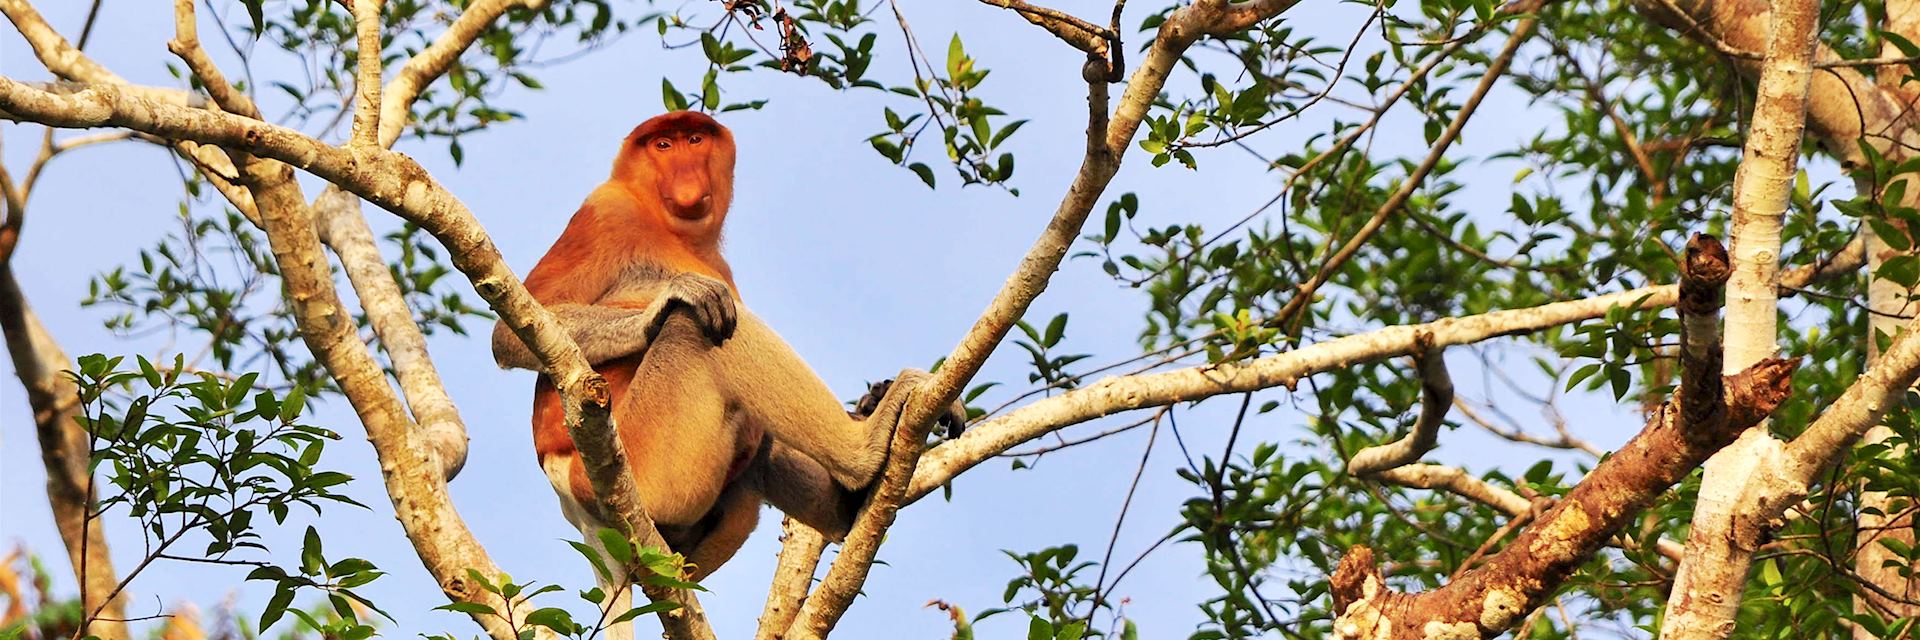 Proboscis monkey, Kinabatangan River